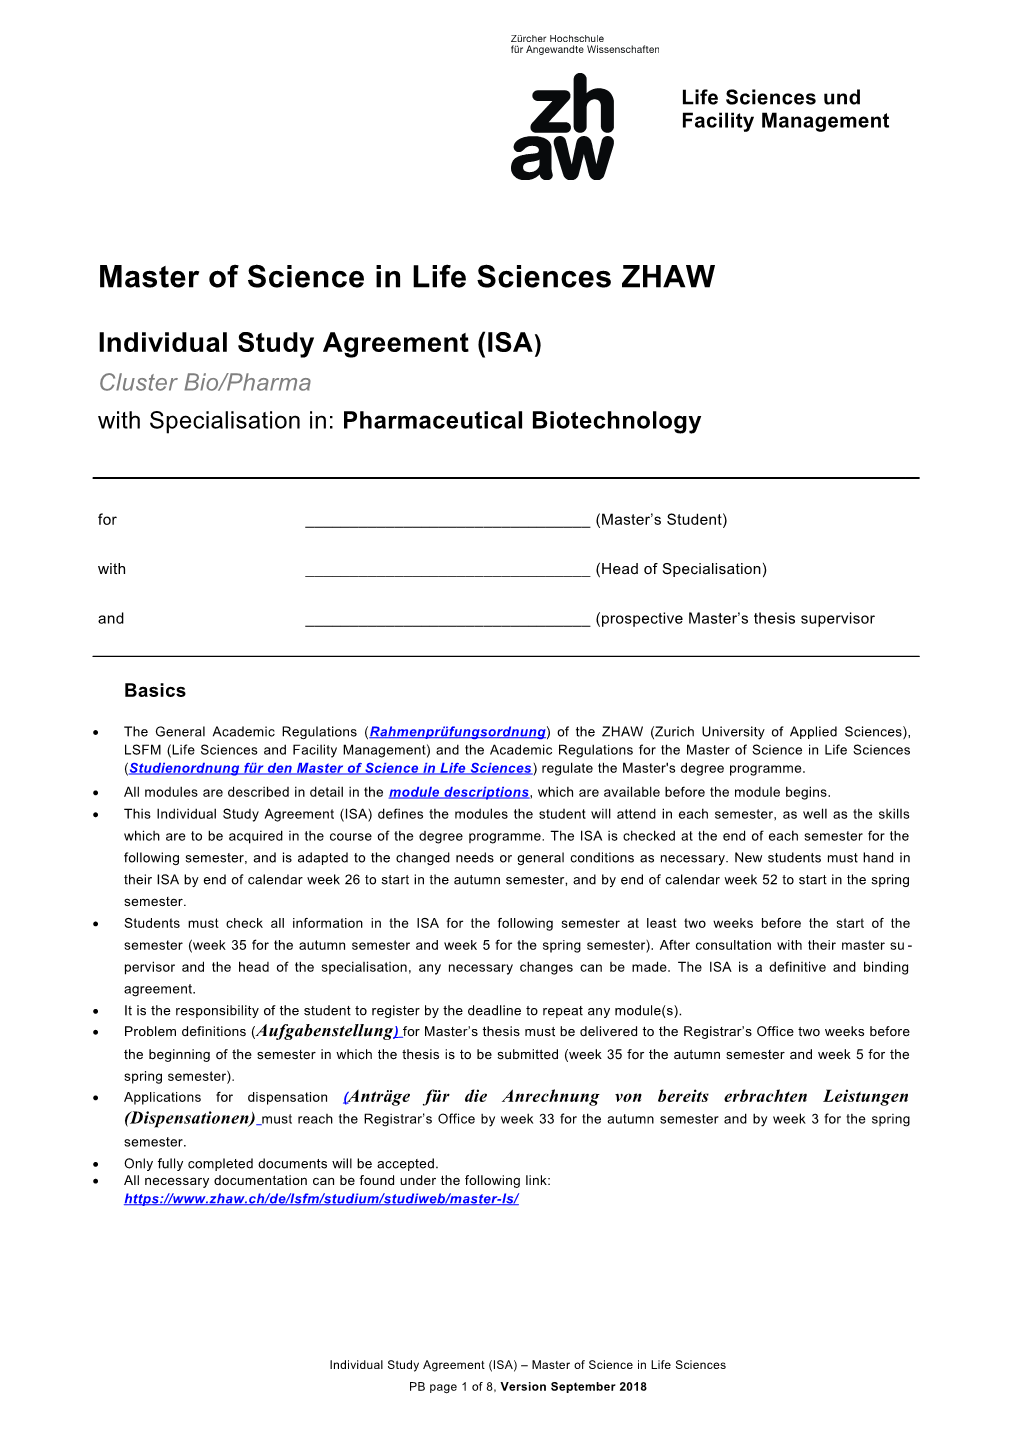 The General Academic Regulations ( Rahmenprüfungsordnung ) of the ZHAW (Zurich University